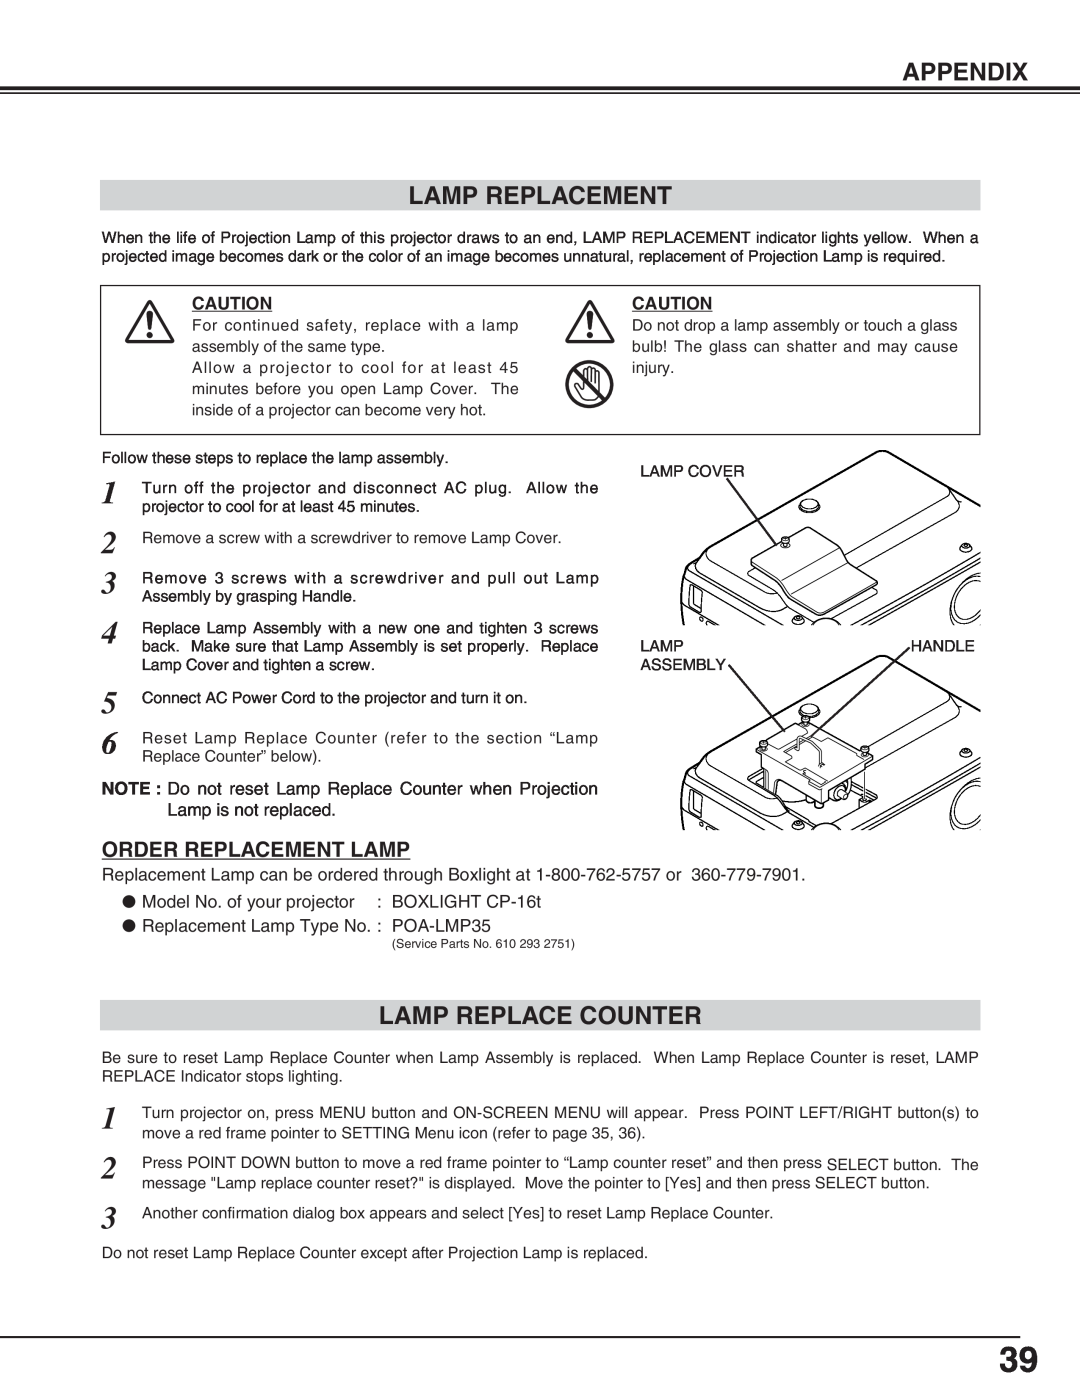 BOXLIGHT cp-16t manual Appendix Lamp Replacement, Lamp Replace Counter, Order Replacement Lamp 